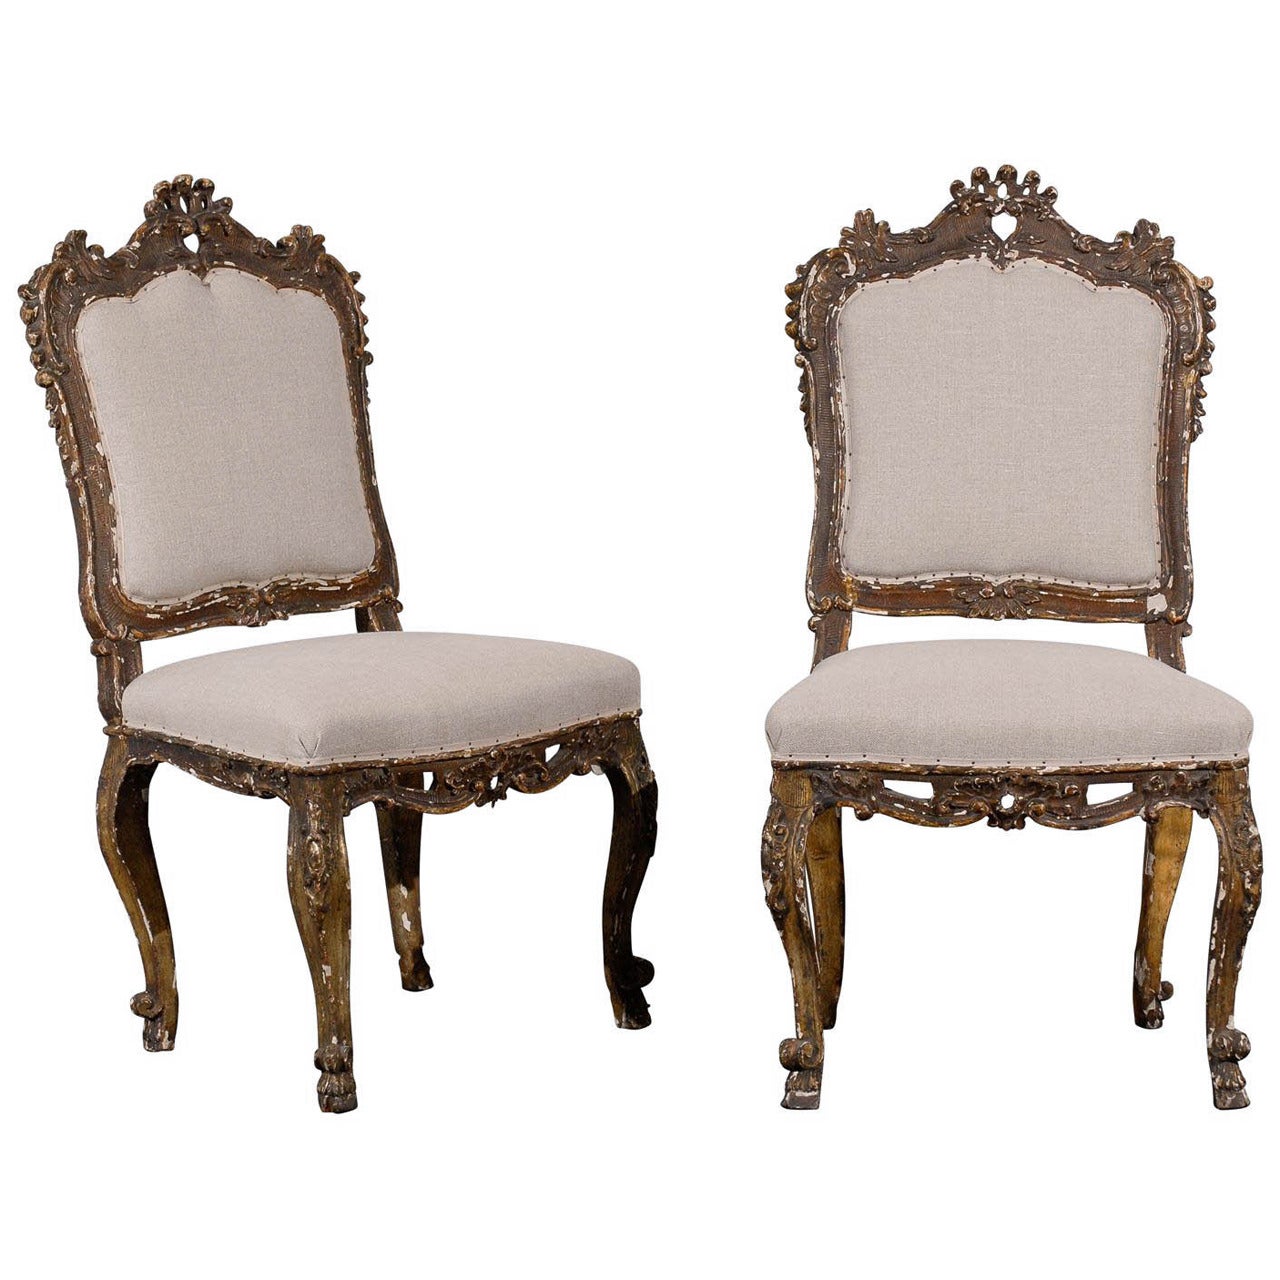 Pair of Italian Ornate, 18th Century Venetian Style Side Chairs